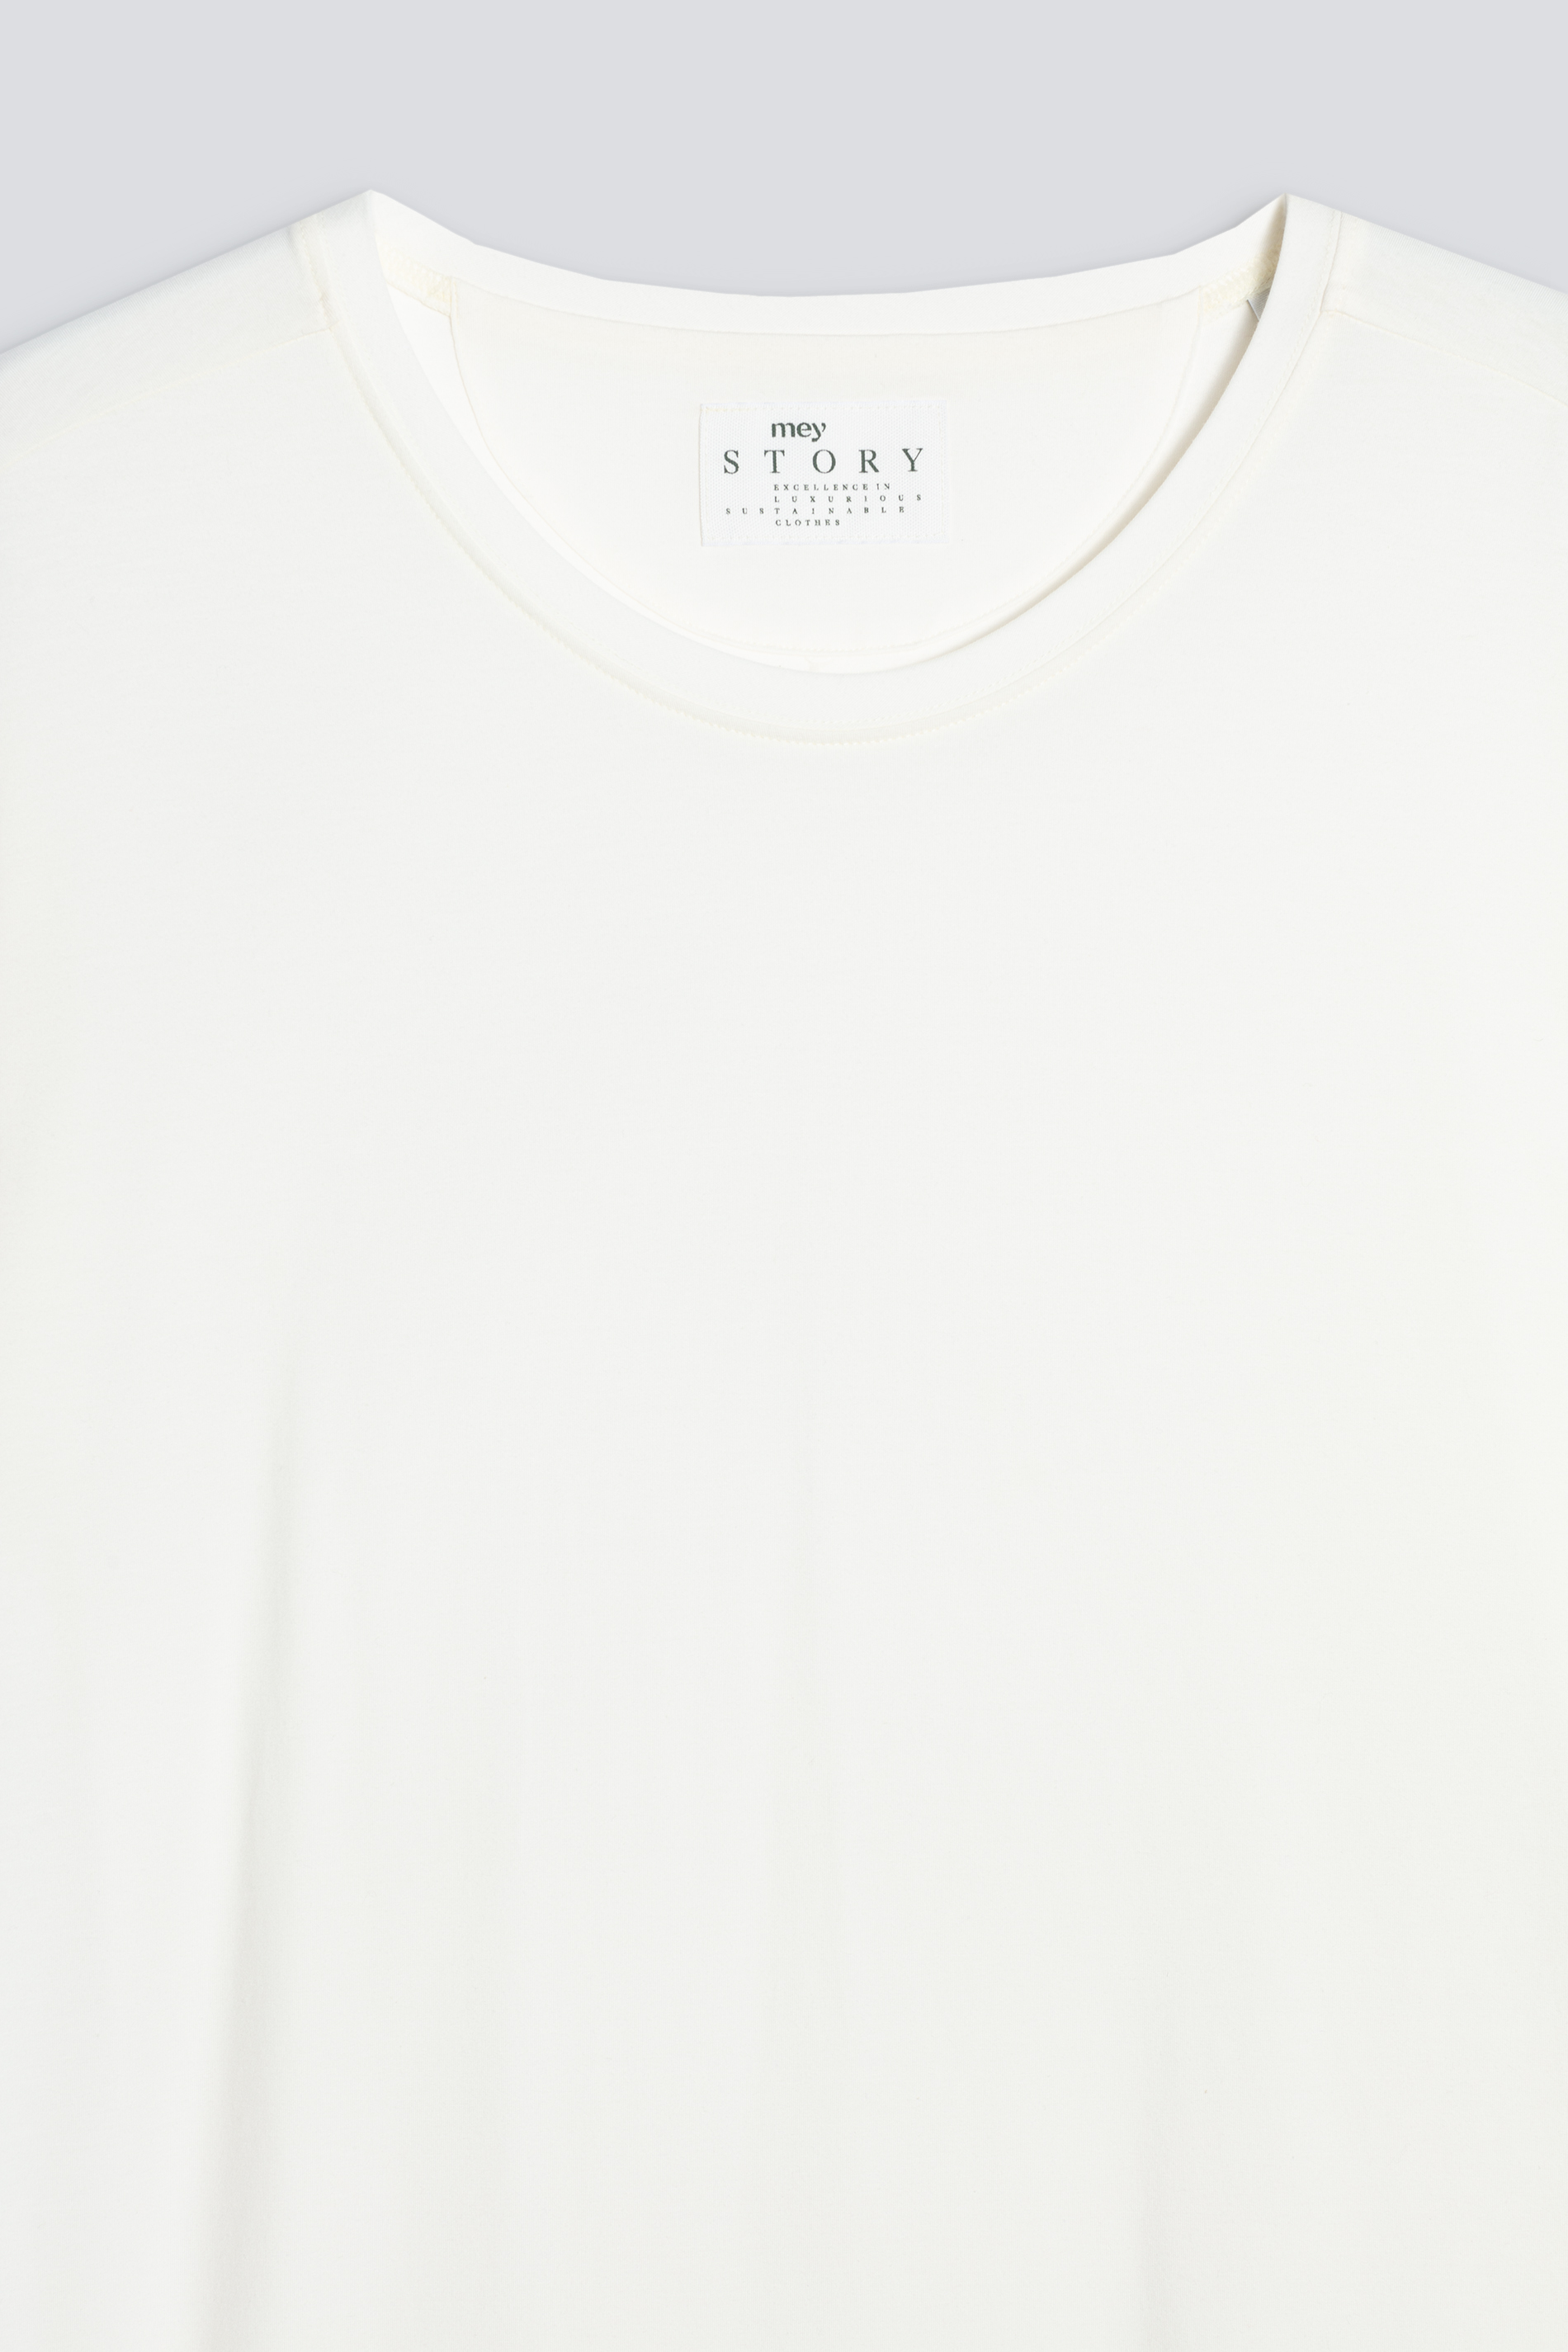 Crew neck T-shirt Whisper White Serie Magila Singola Detail View 01 | mey®